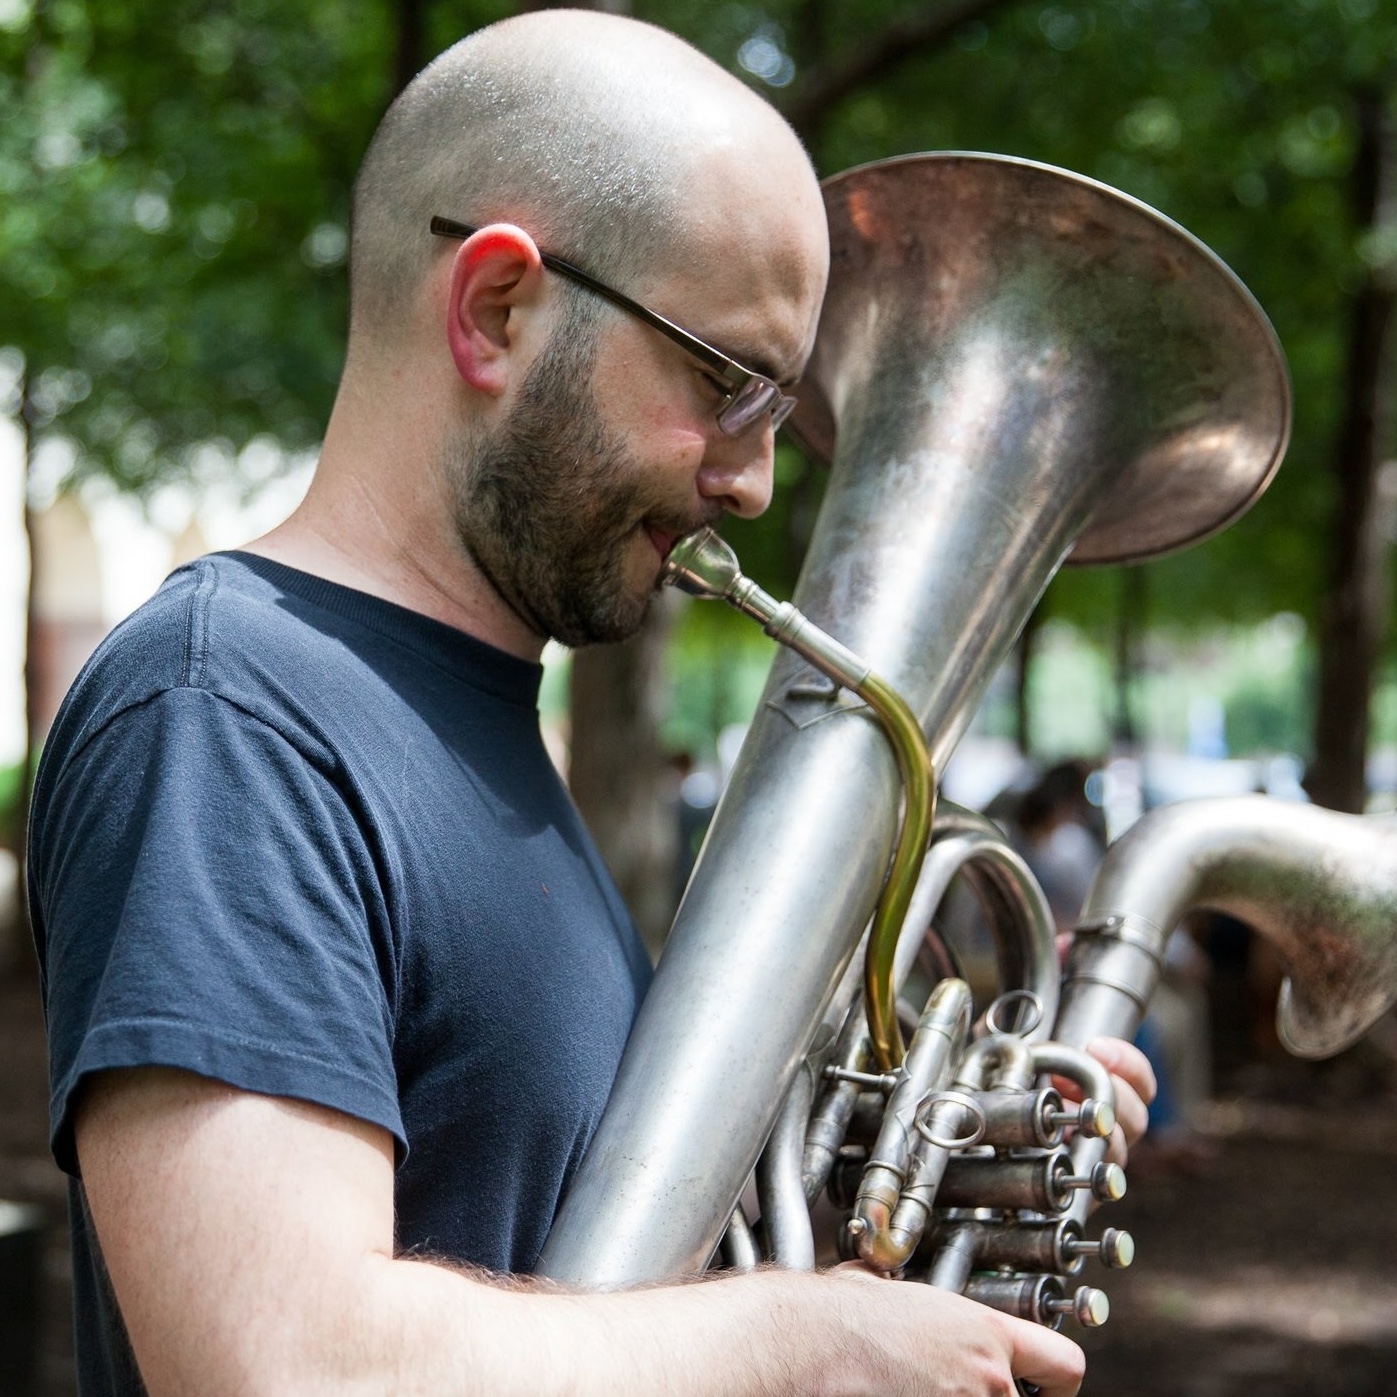 A bald man blowing into a brass instrument